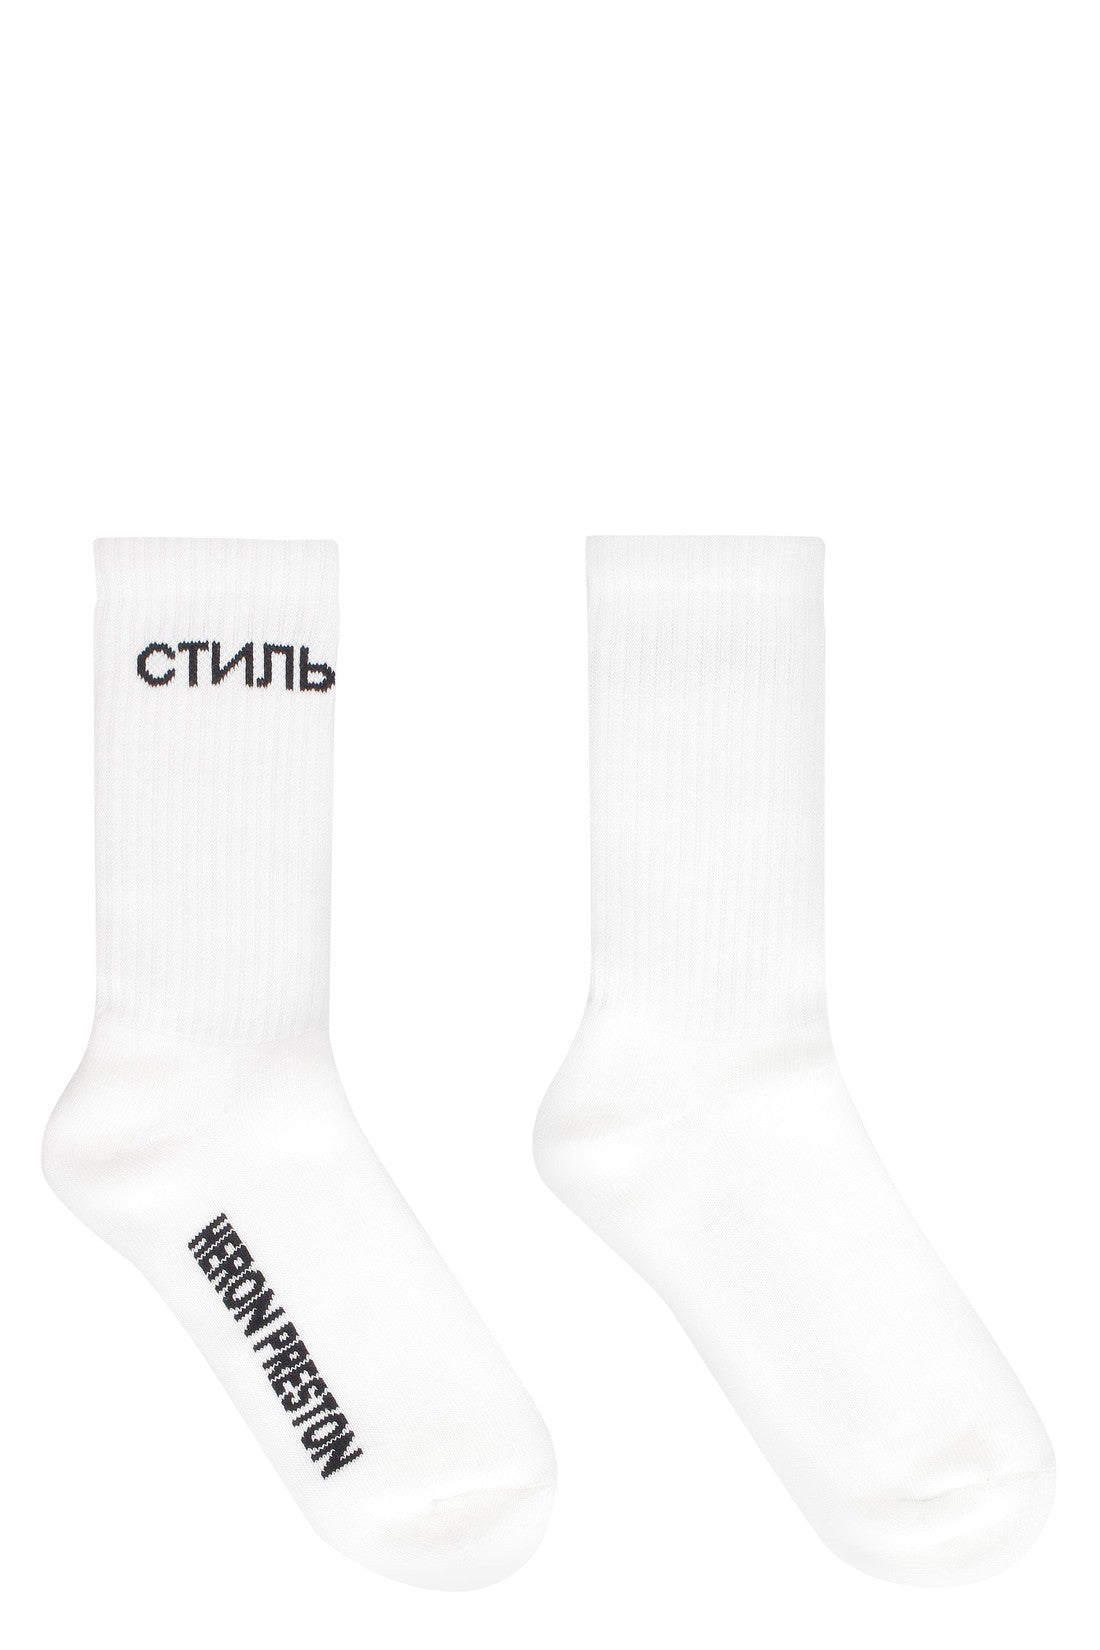 Heron Preston-OUTLET-SALE-Logo cotton blend socks-ARCHIVIST